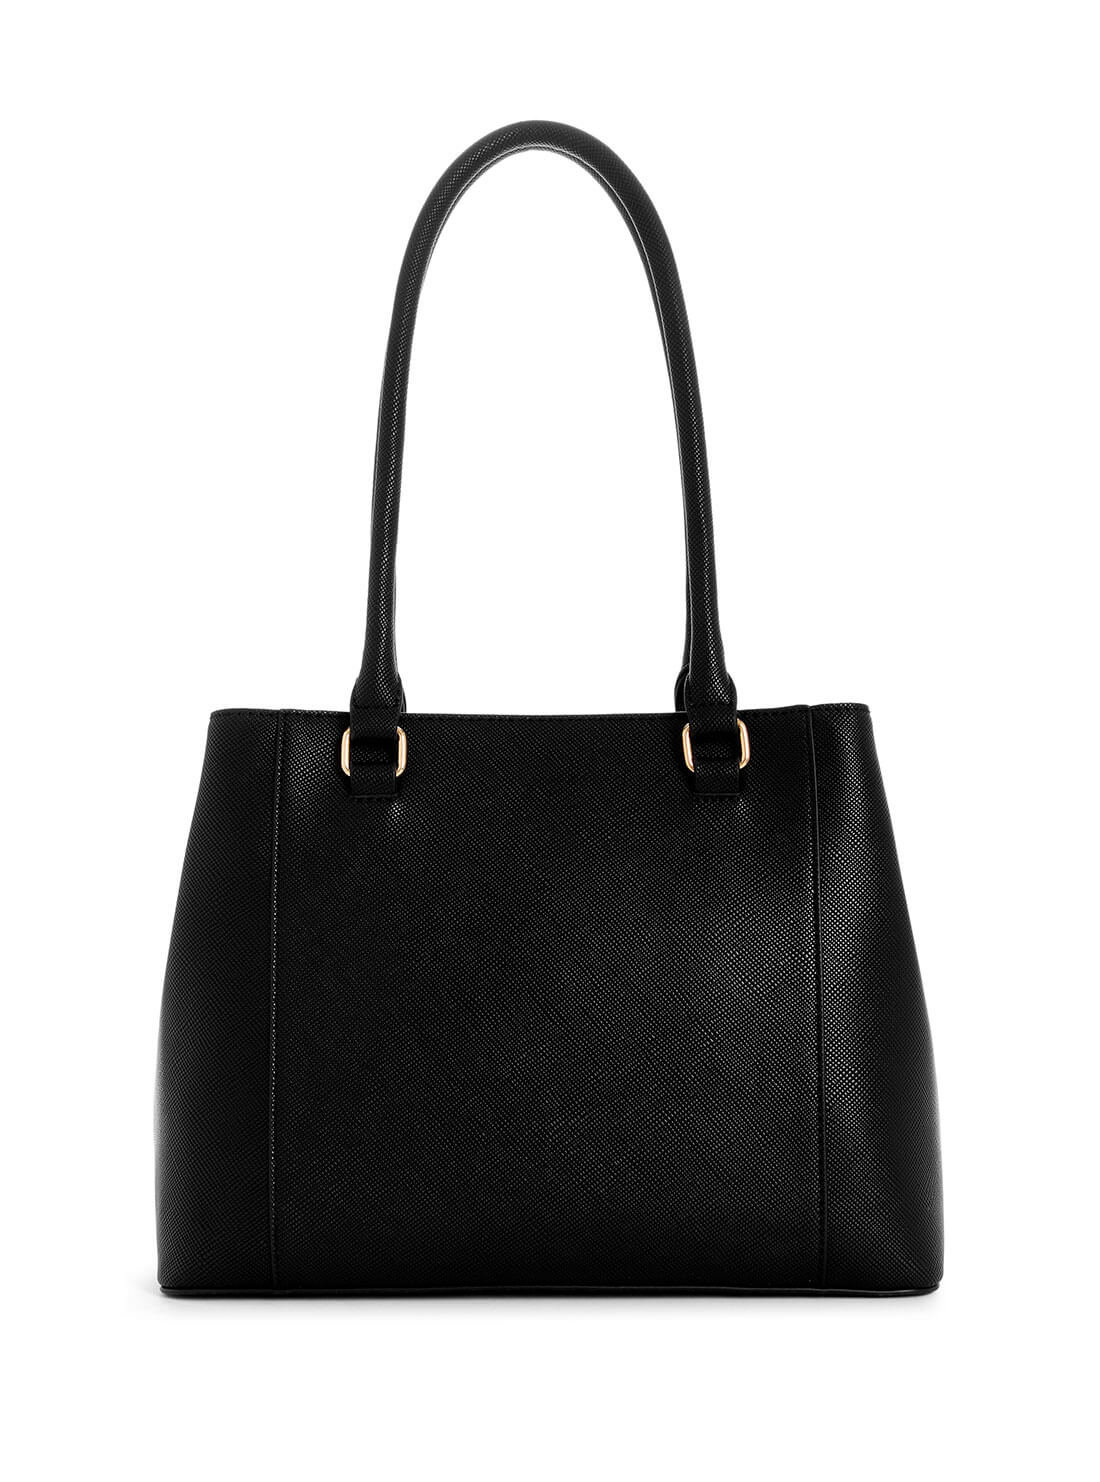 Women's Black Breana Shopper Tote Bag back view